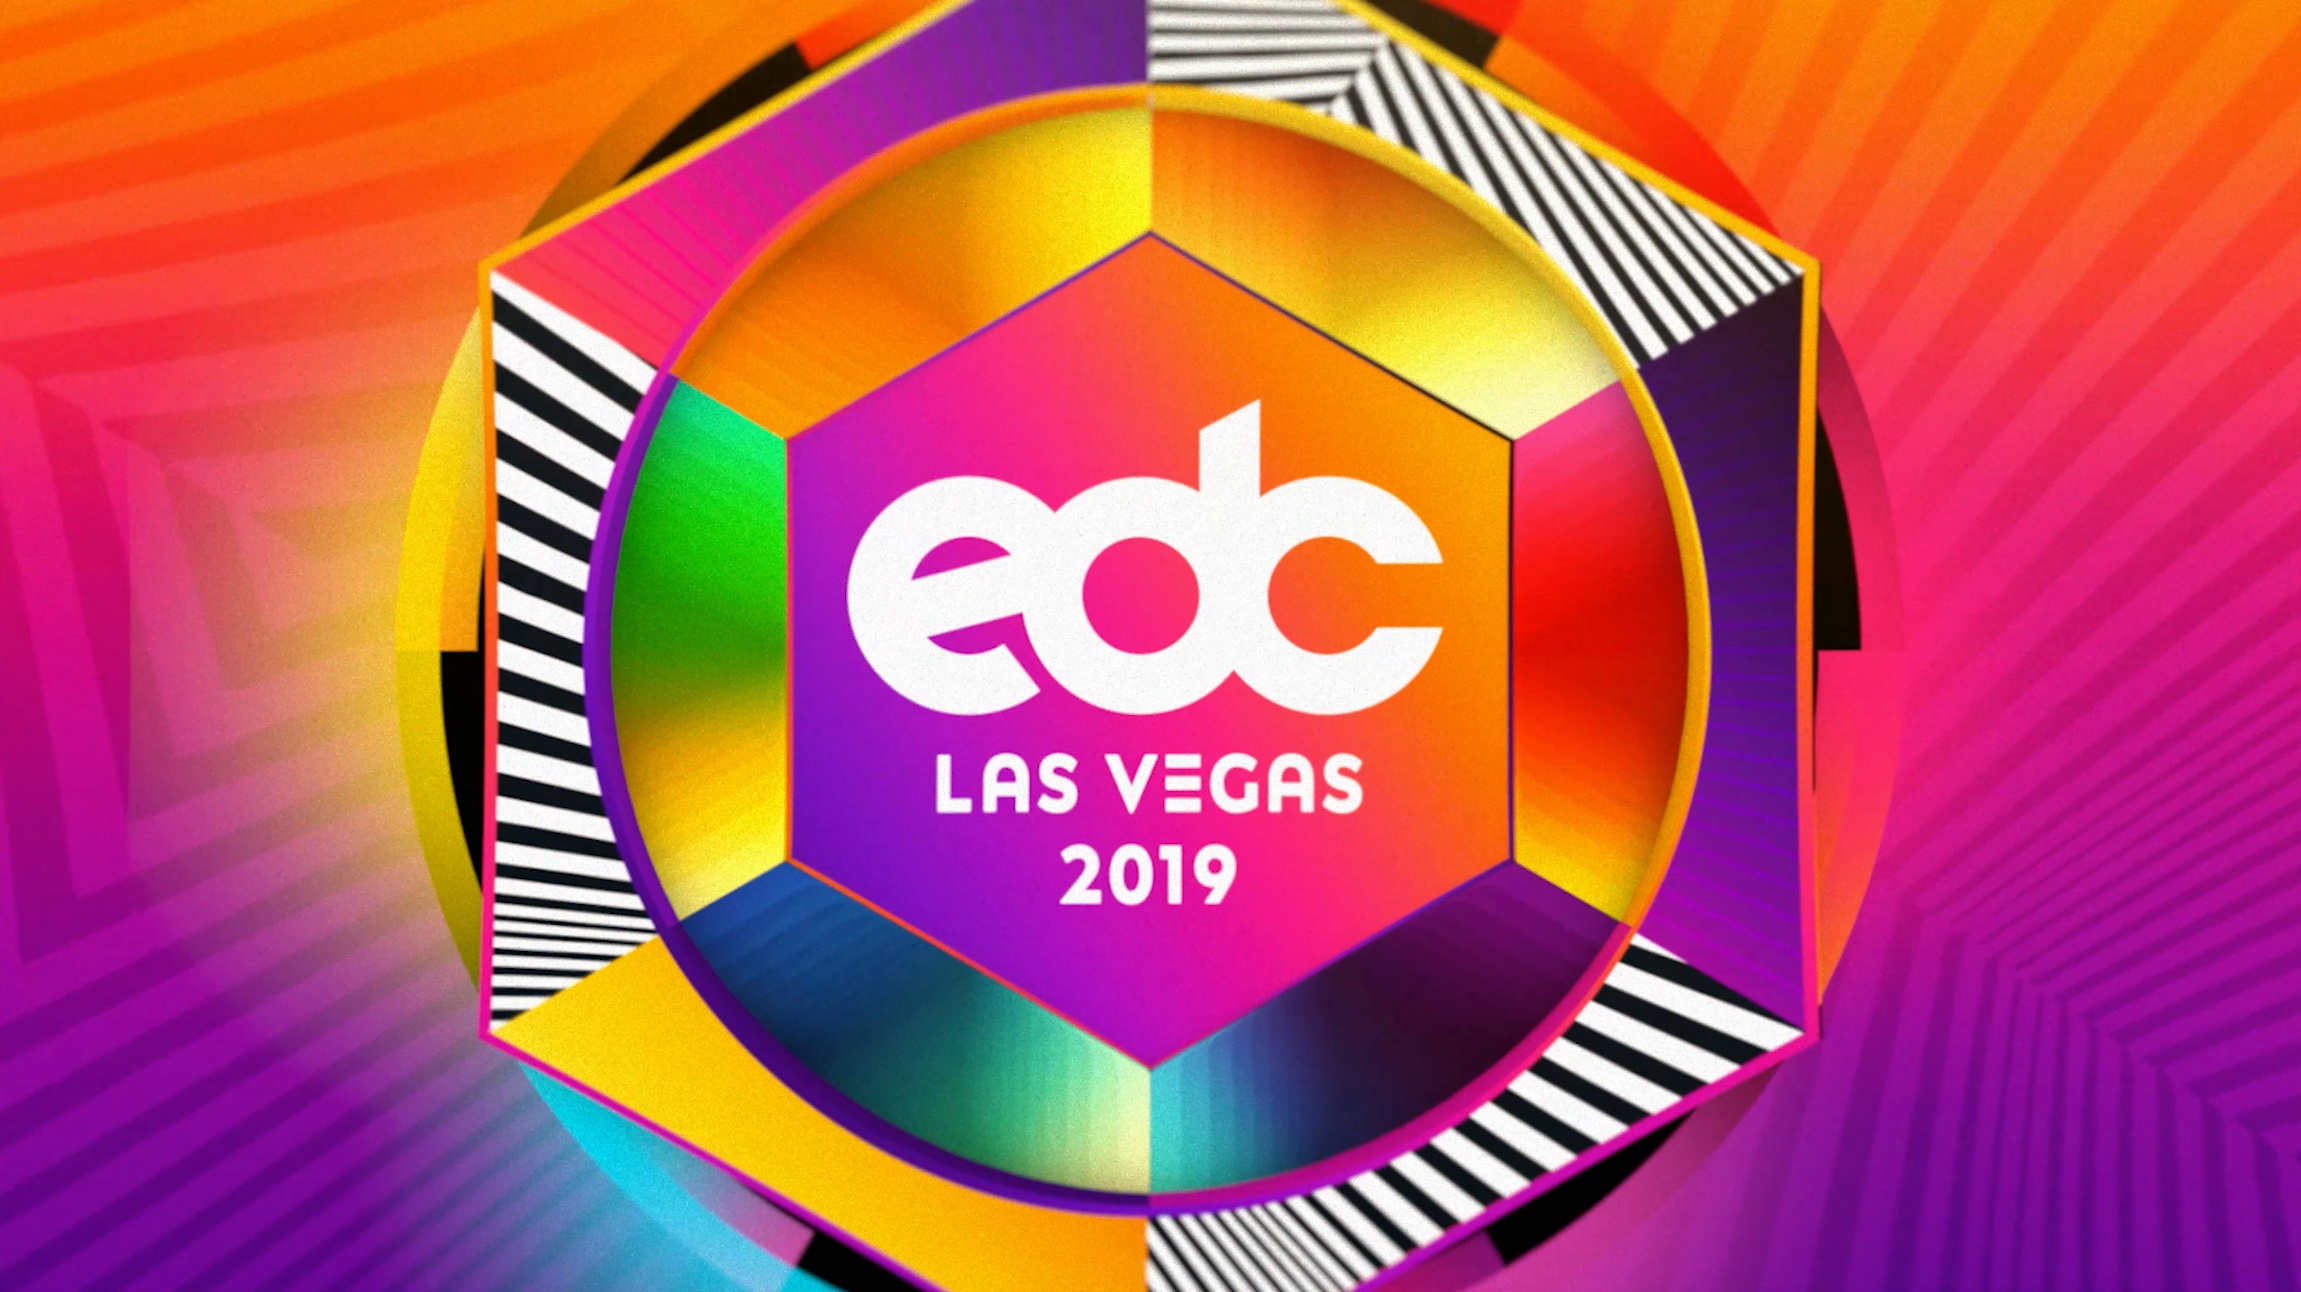 Official EDC Las Vegas 2019 trailer premieres | Electronic Vegas